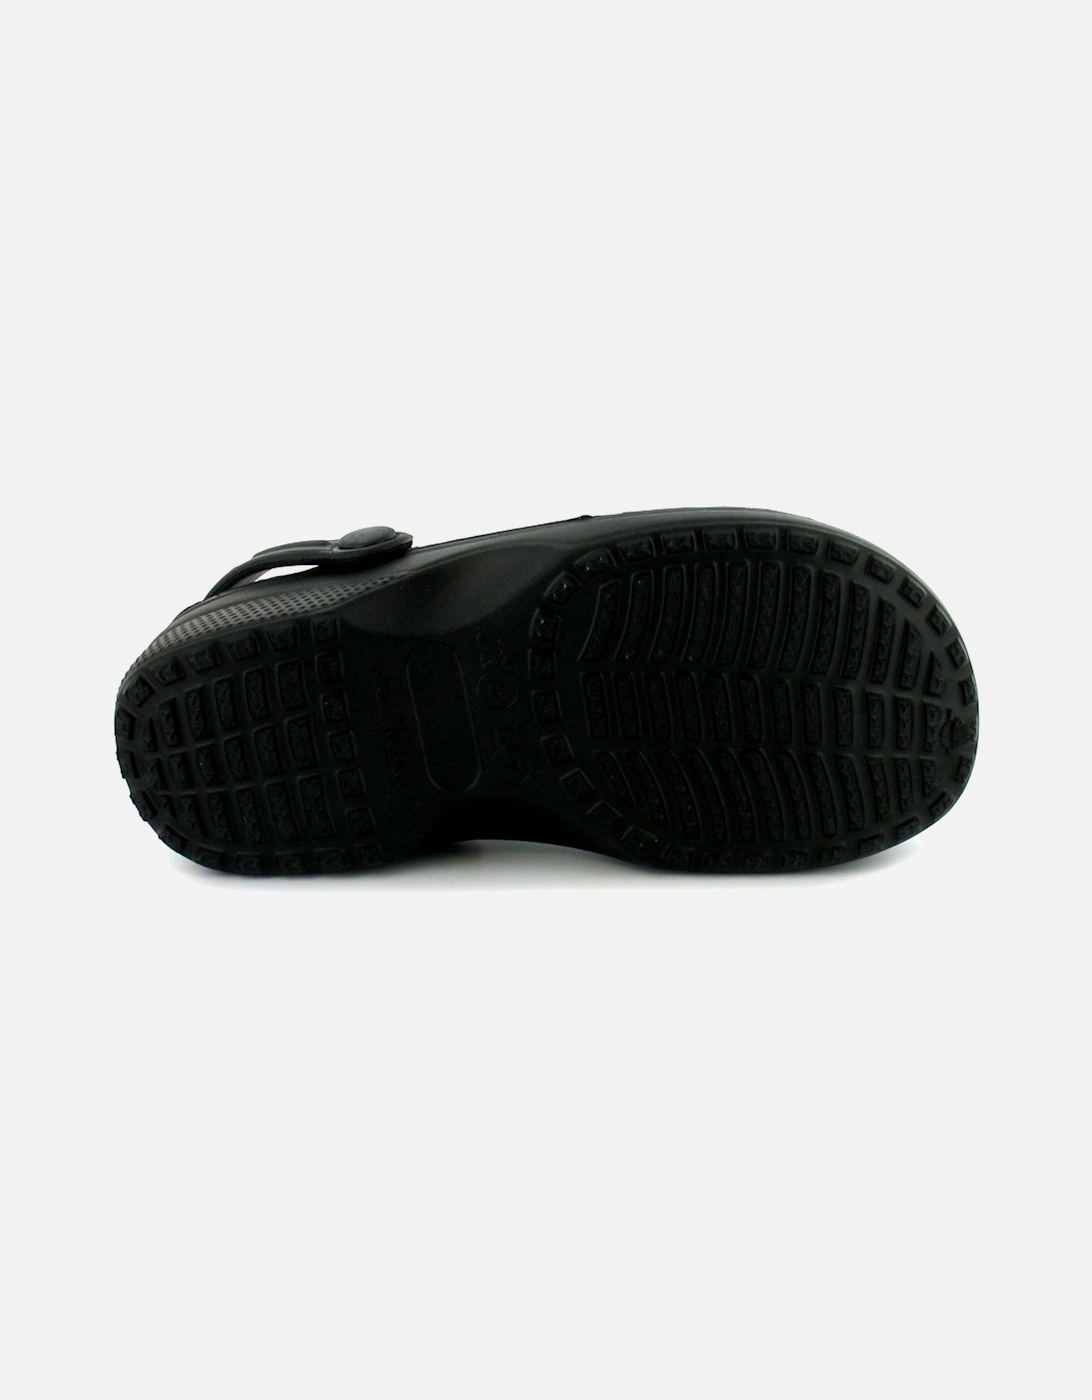 Womens Clog Beach Sandals Pop Slip On black UK Size